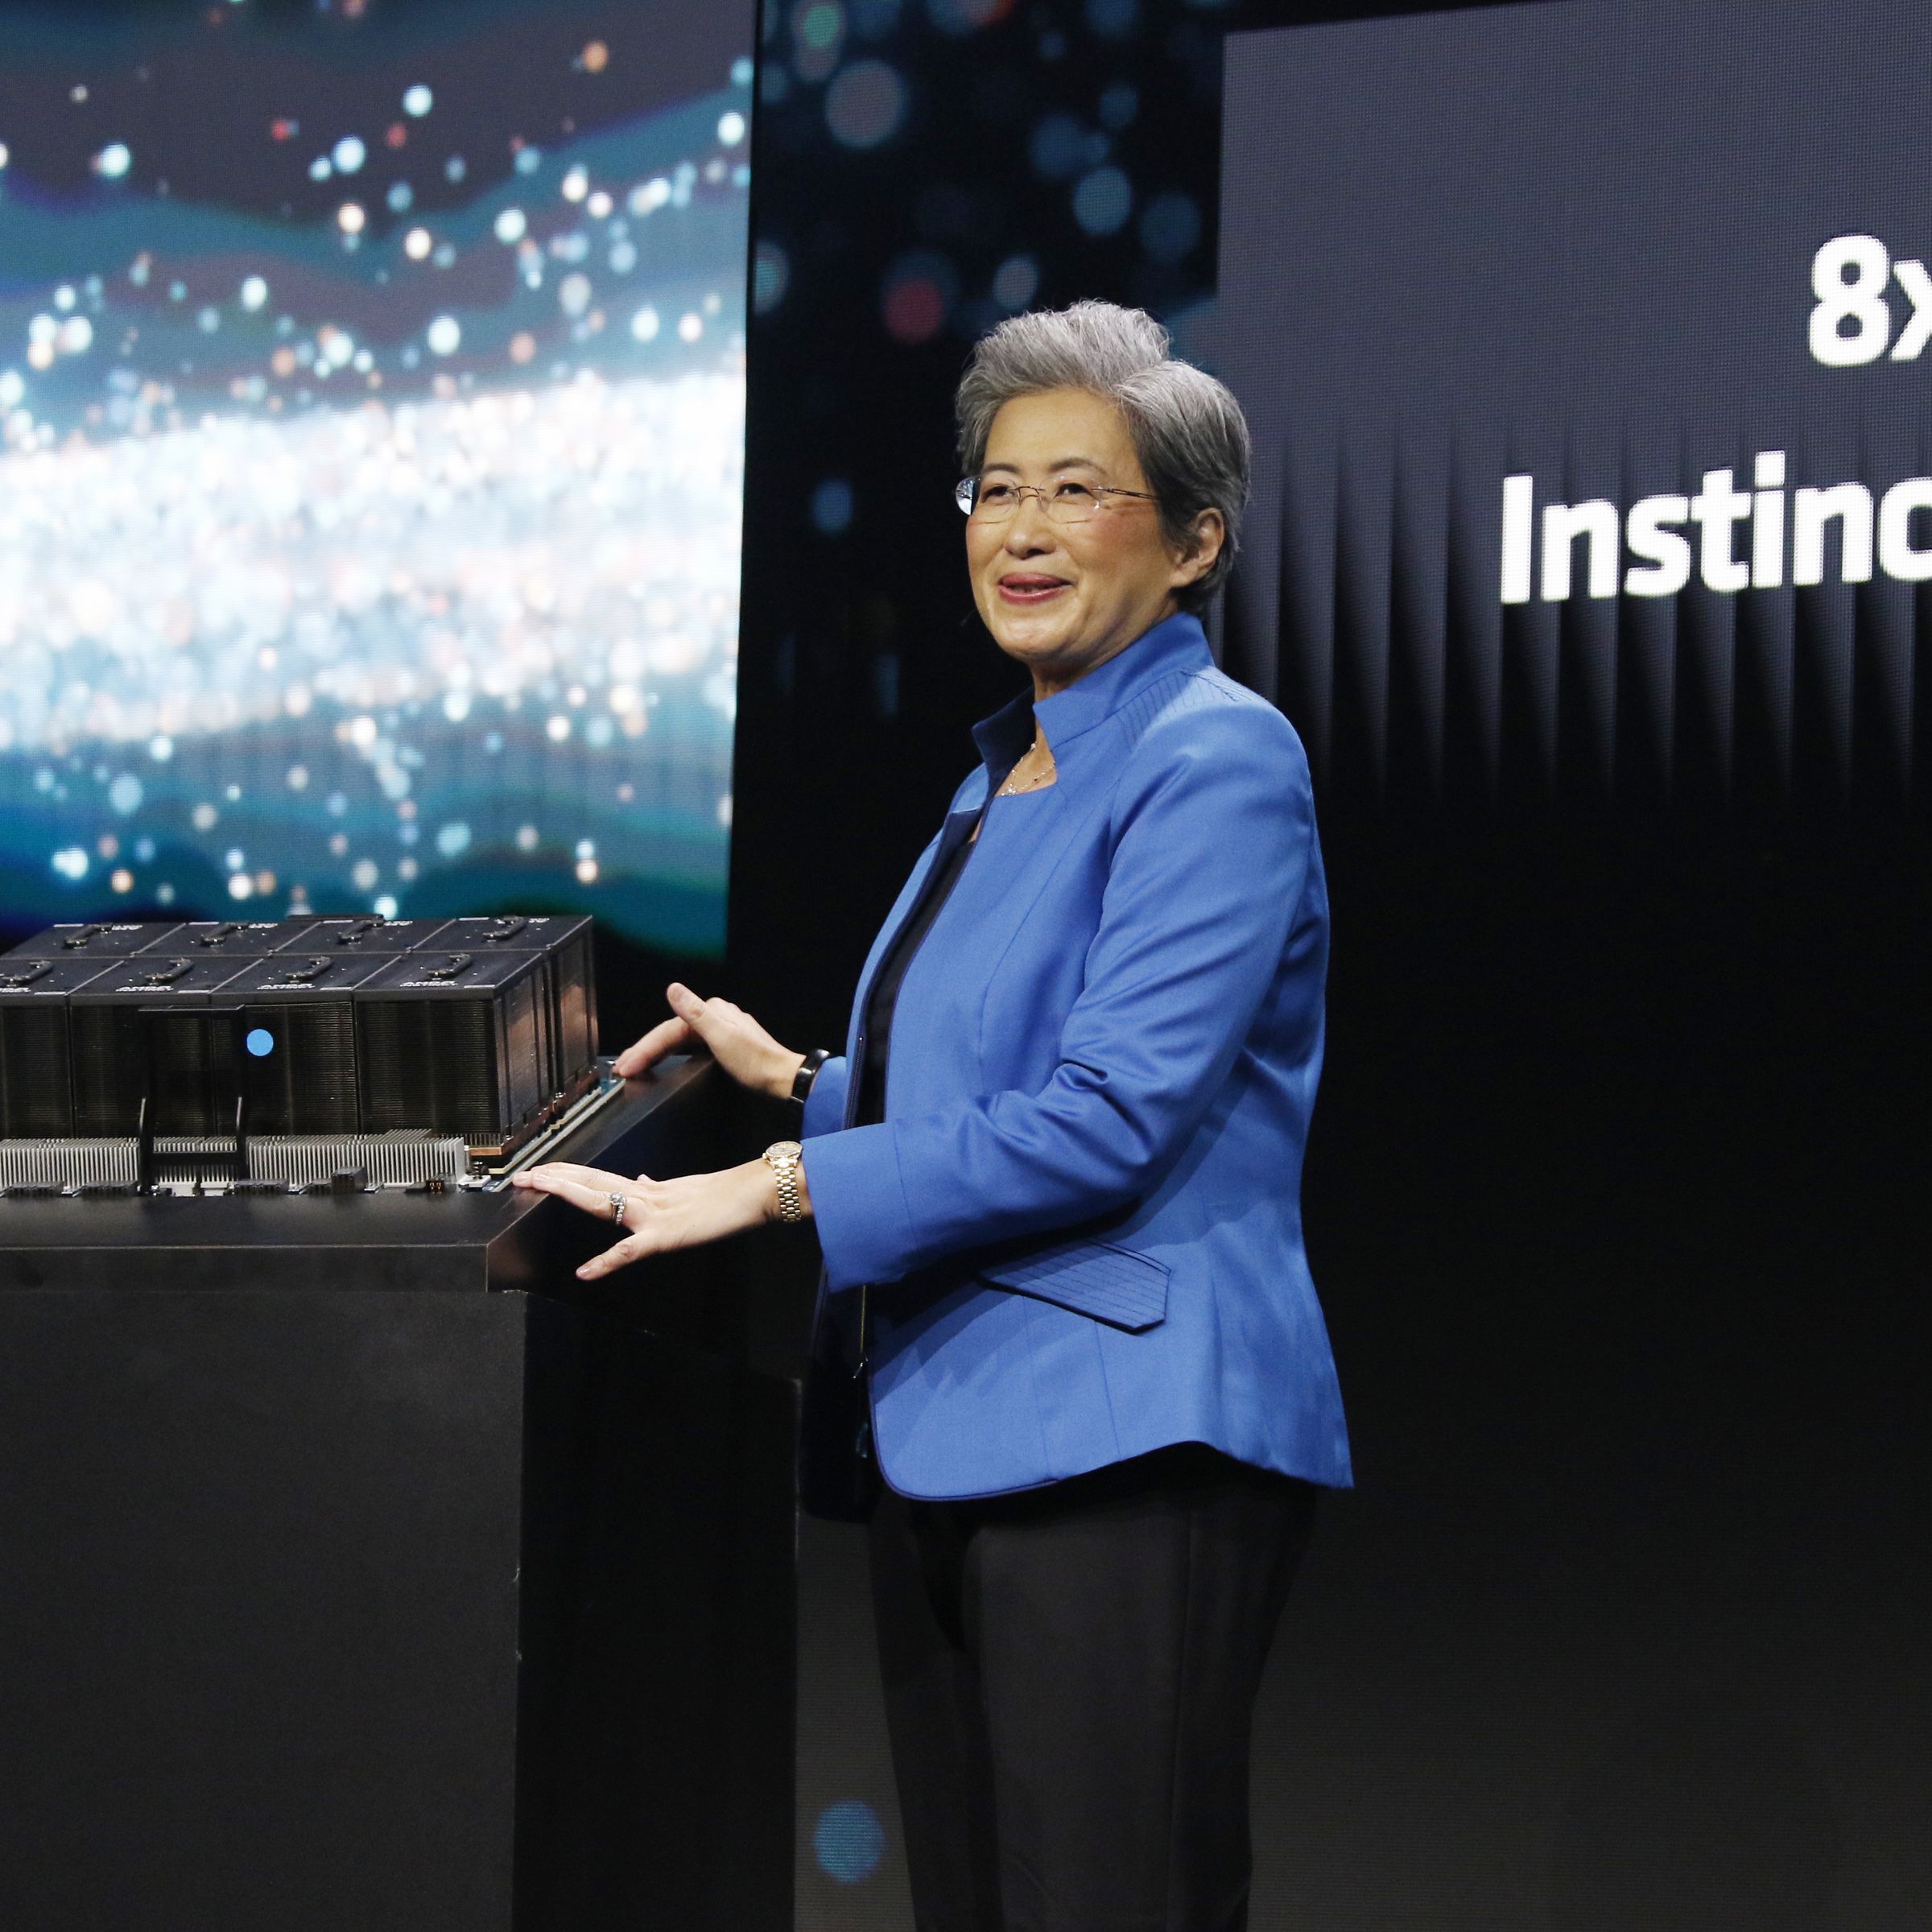 Lisa Su onstage with MI300X processors